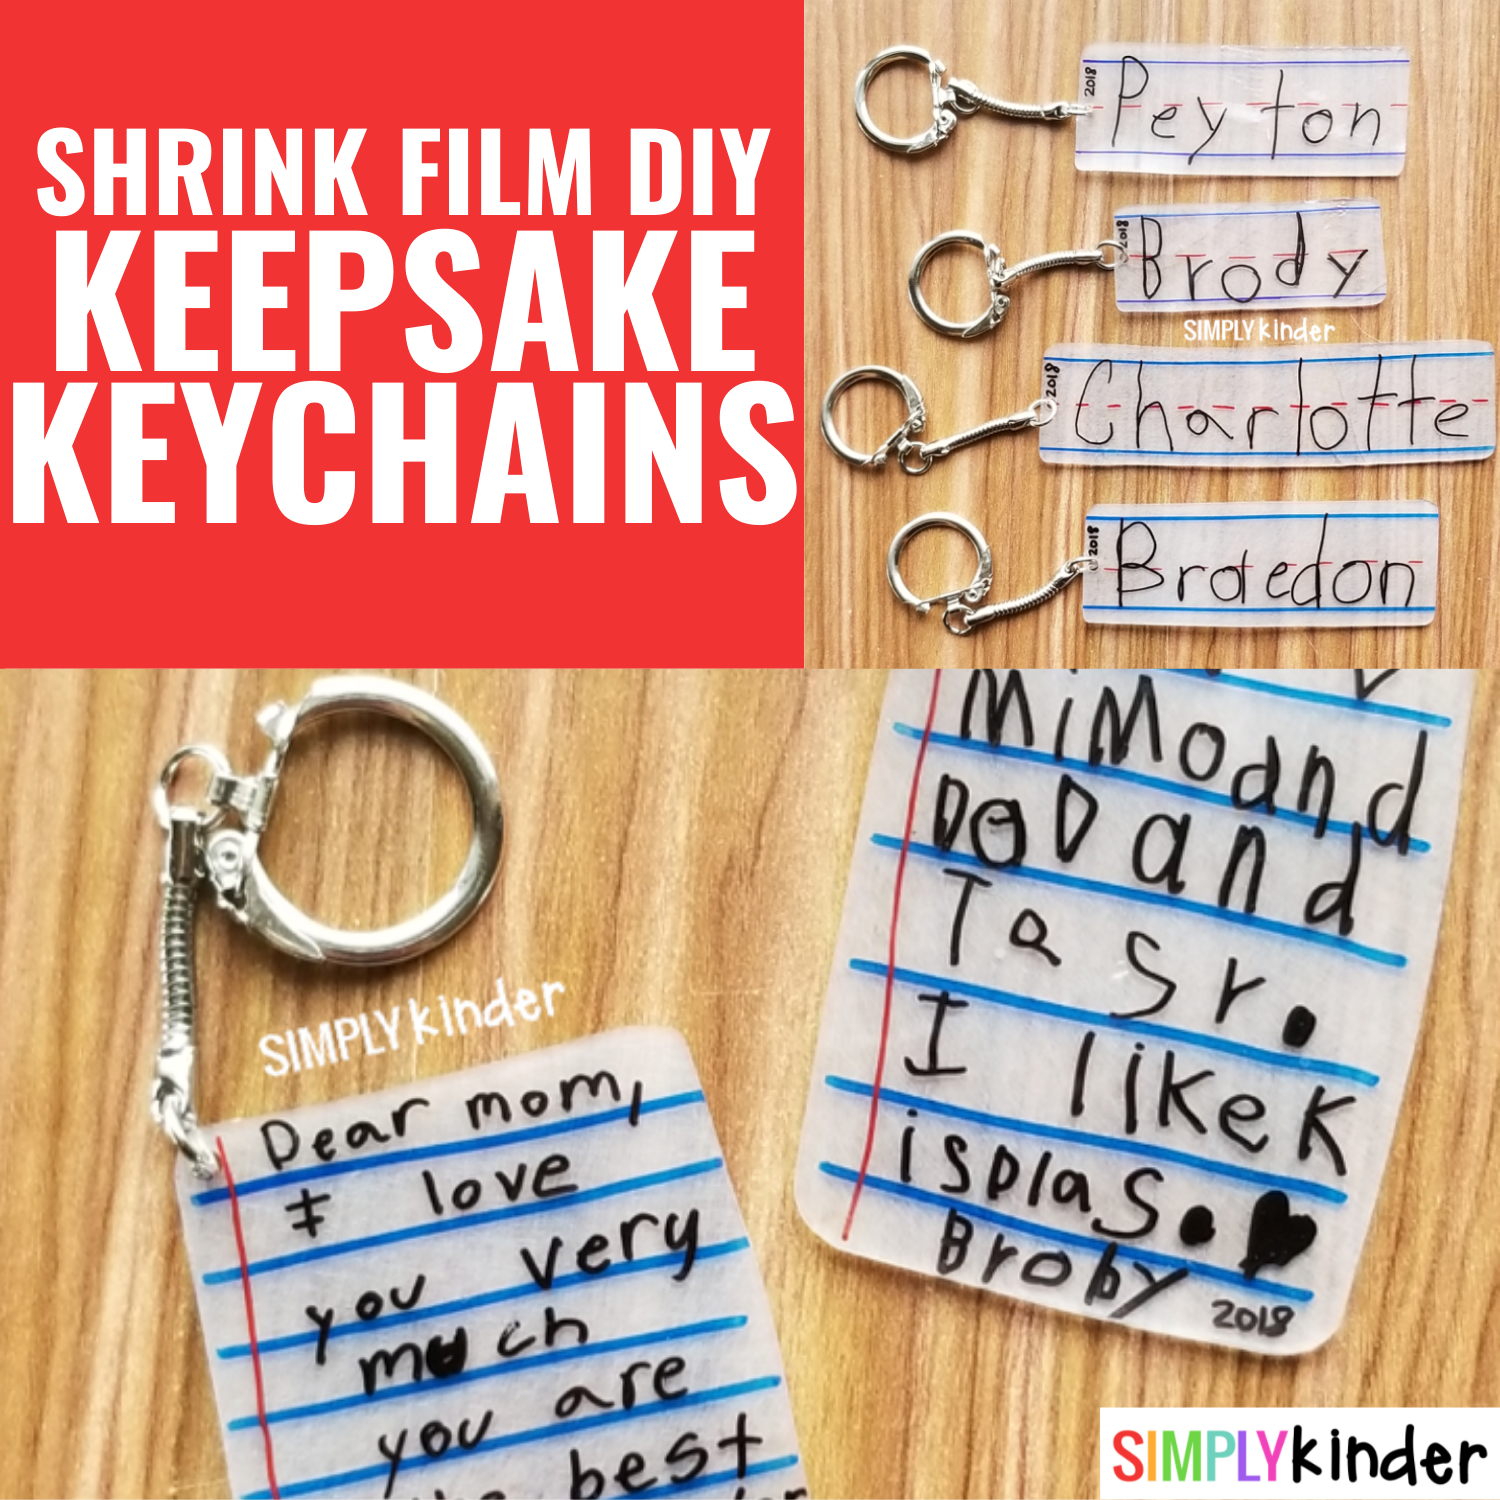 Shrink Film Keepsake Keychains - Simply Kinder